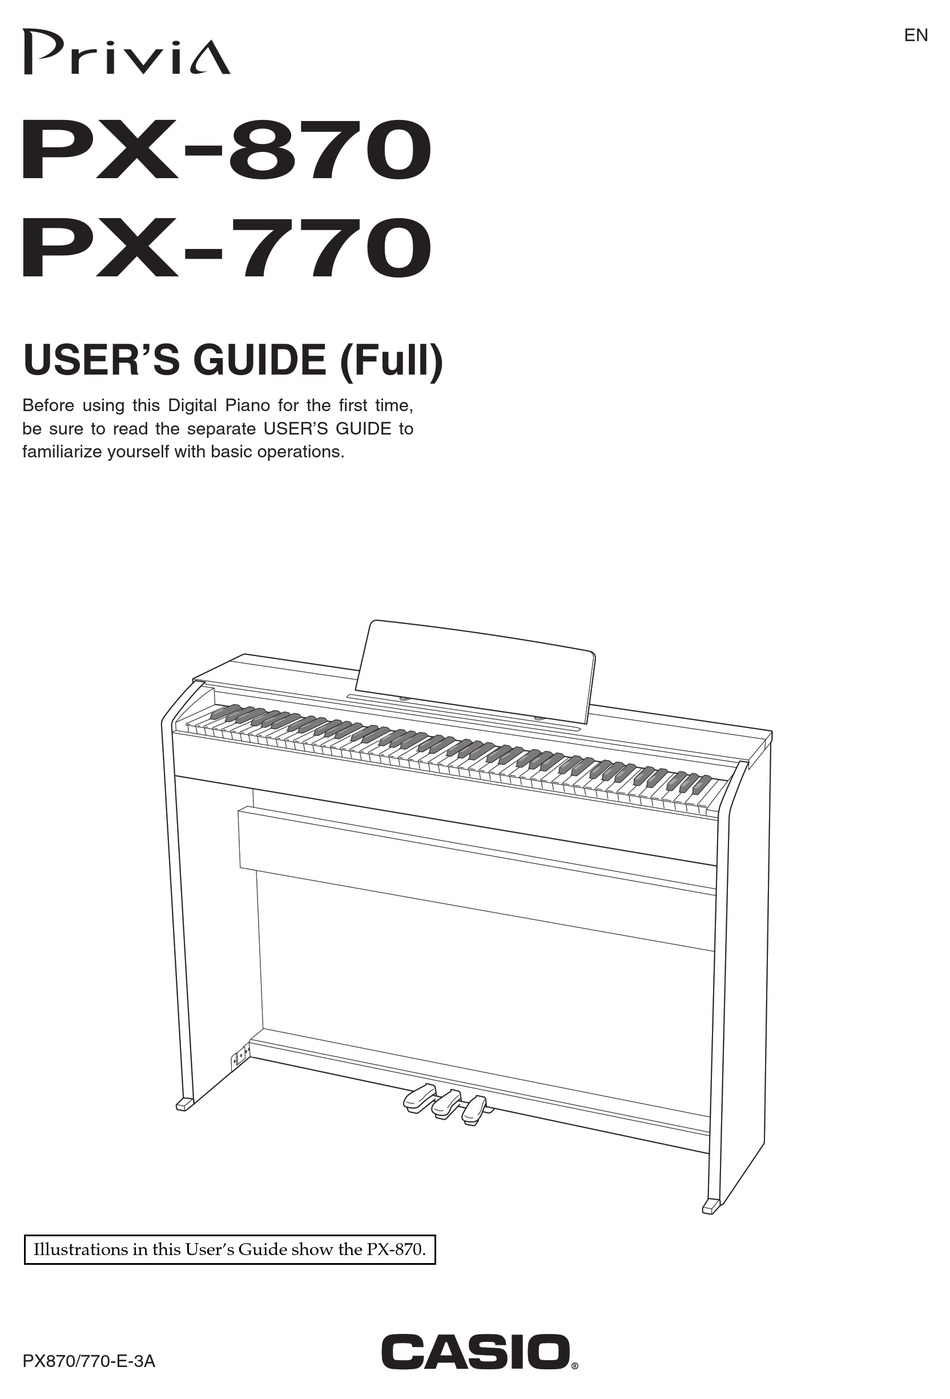 CASIO PRIVIA PX-870 USER MANUAL Pdf Download | ManualsLib